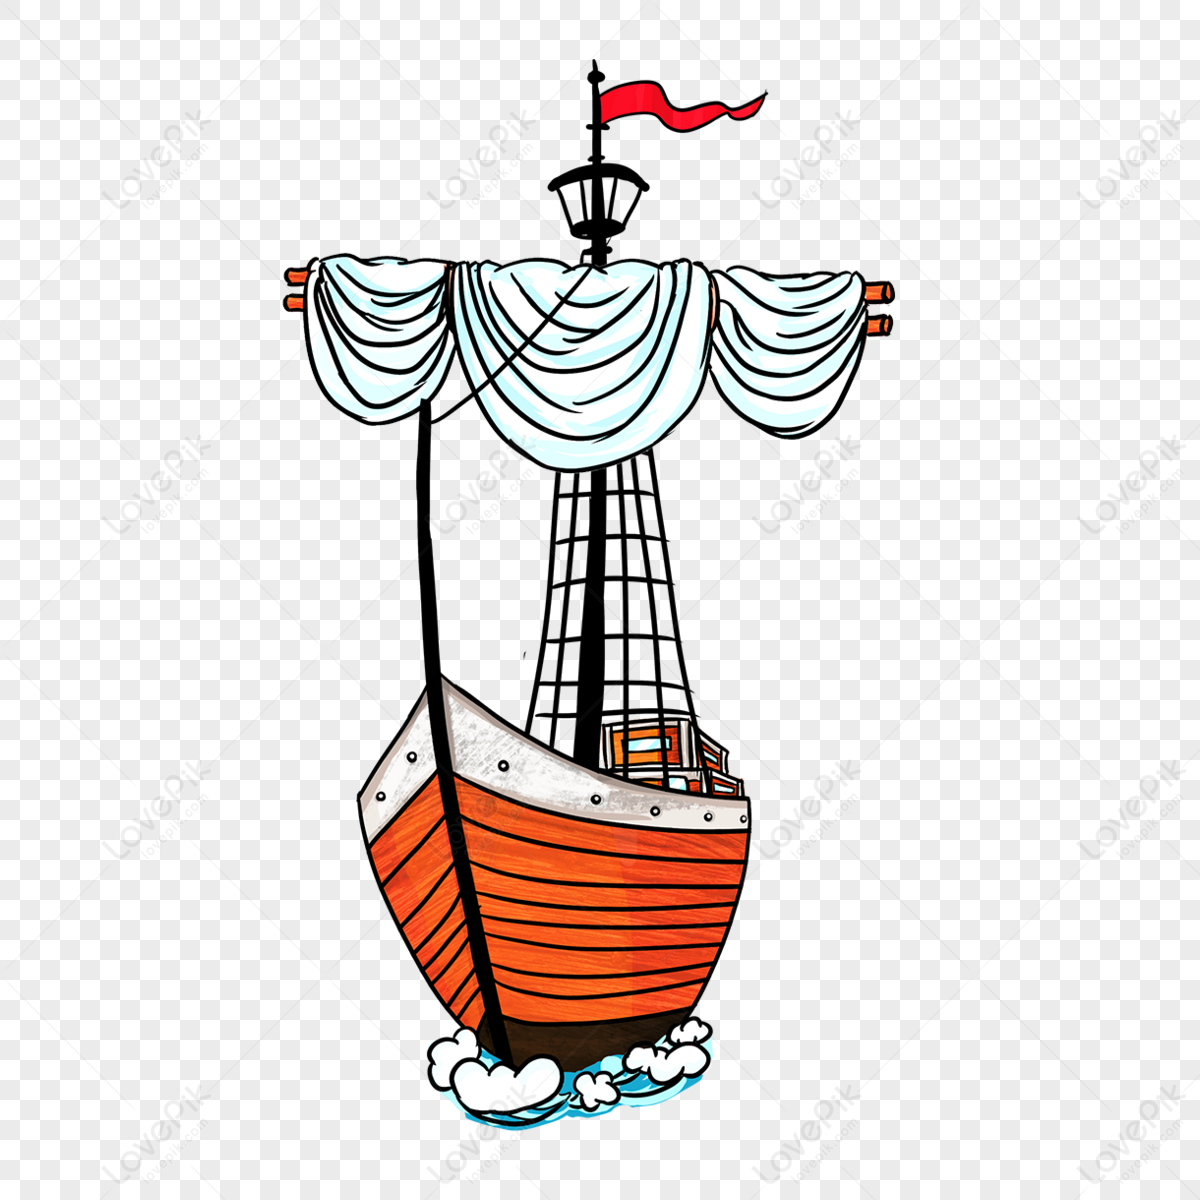 Cartoon style clip art orange sailing sailboat,spray,ferry png transparent background